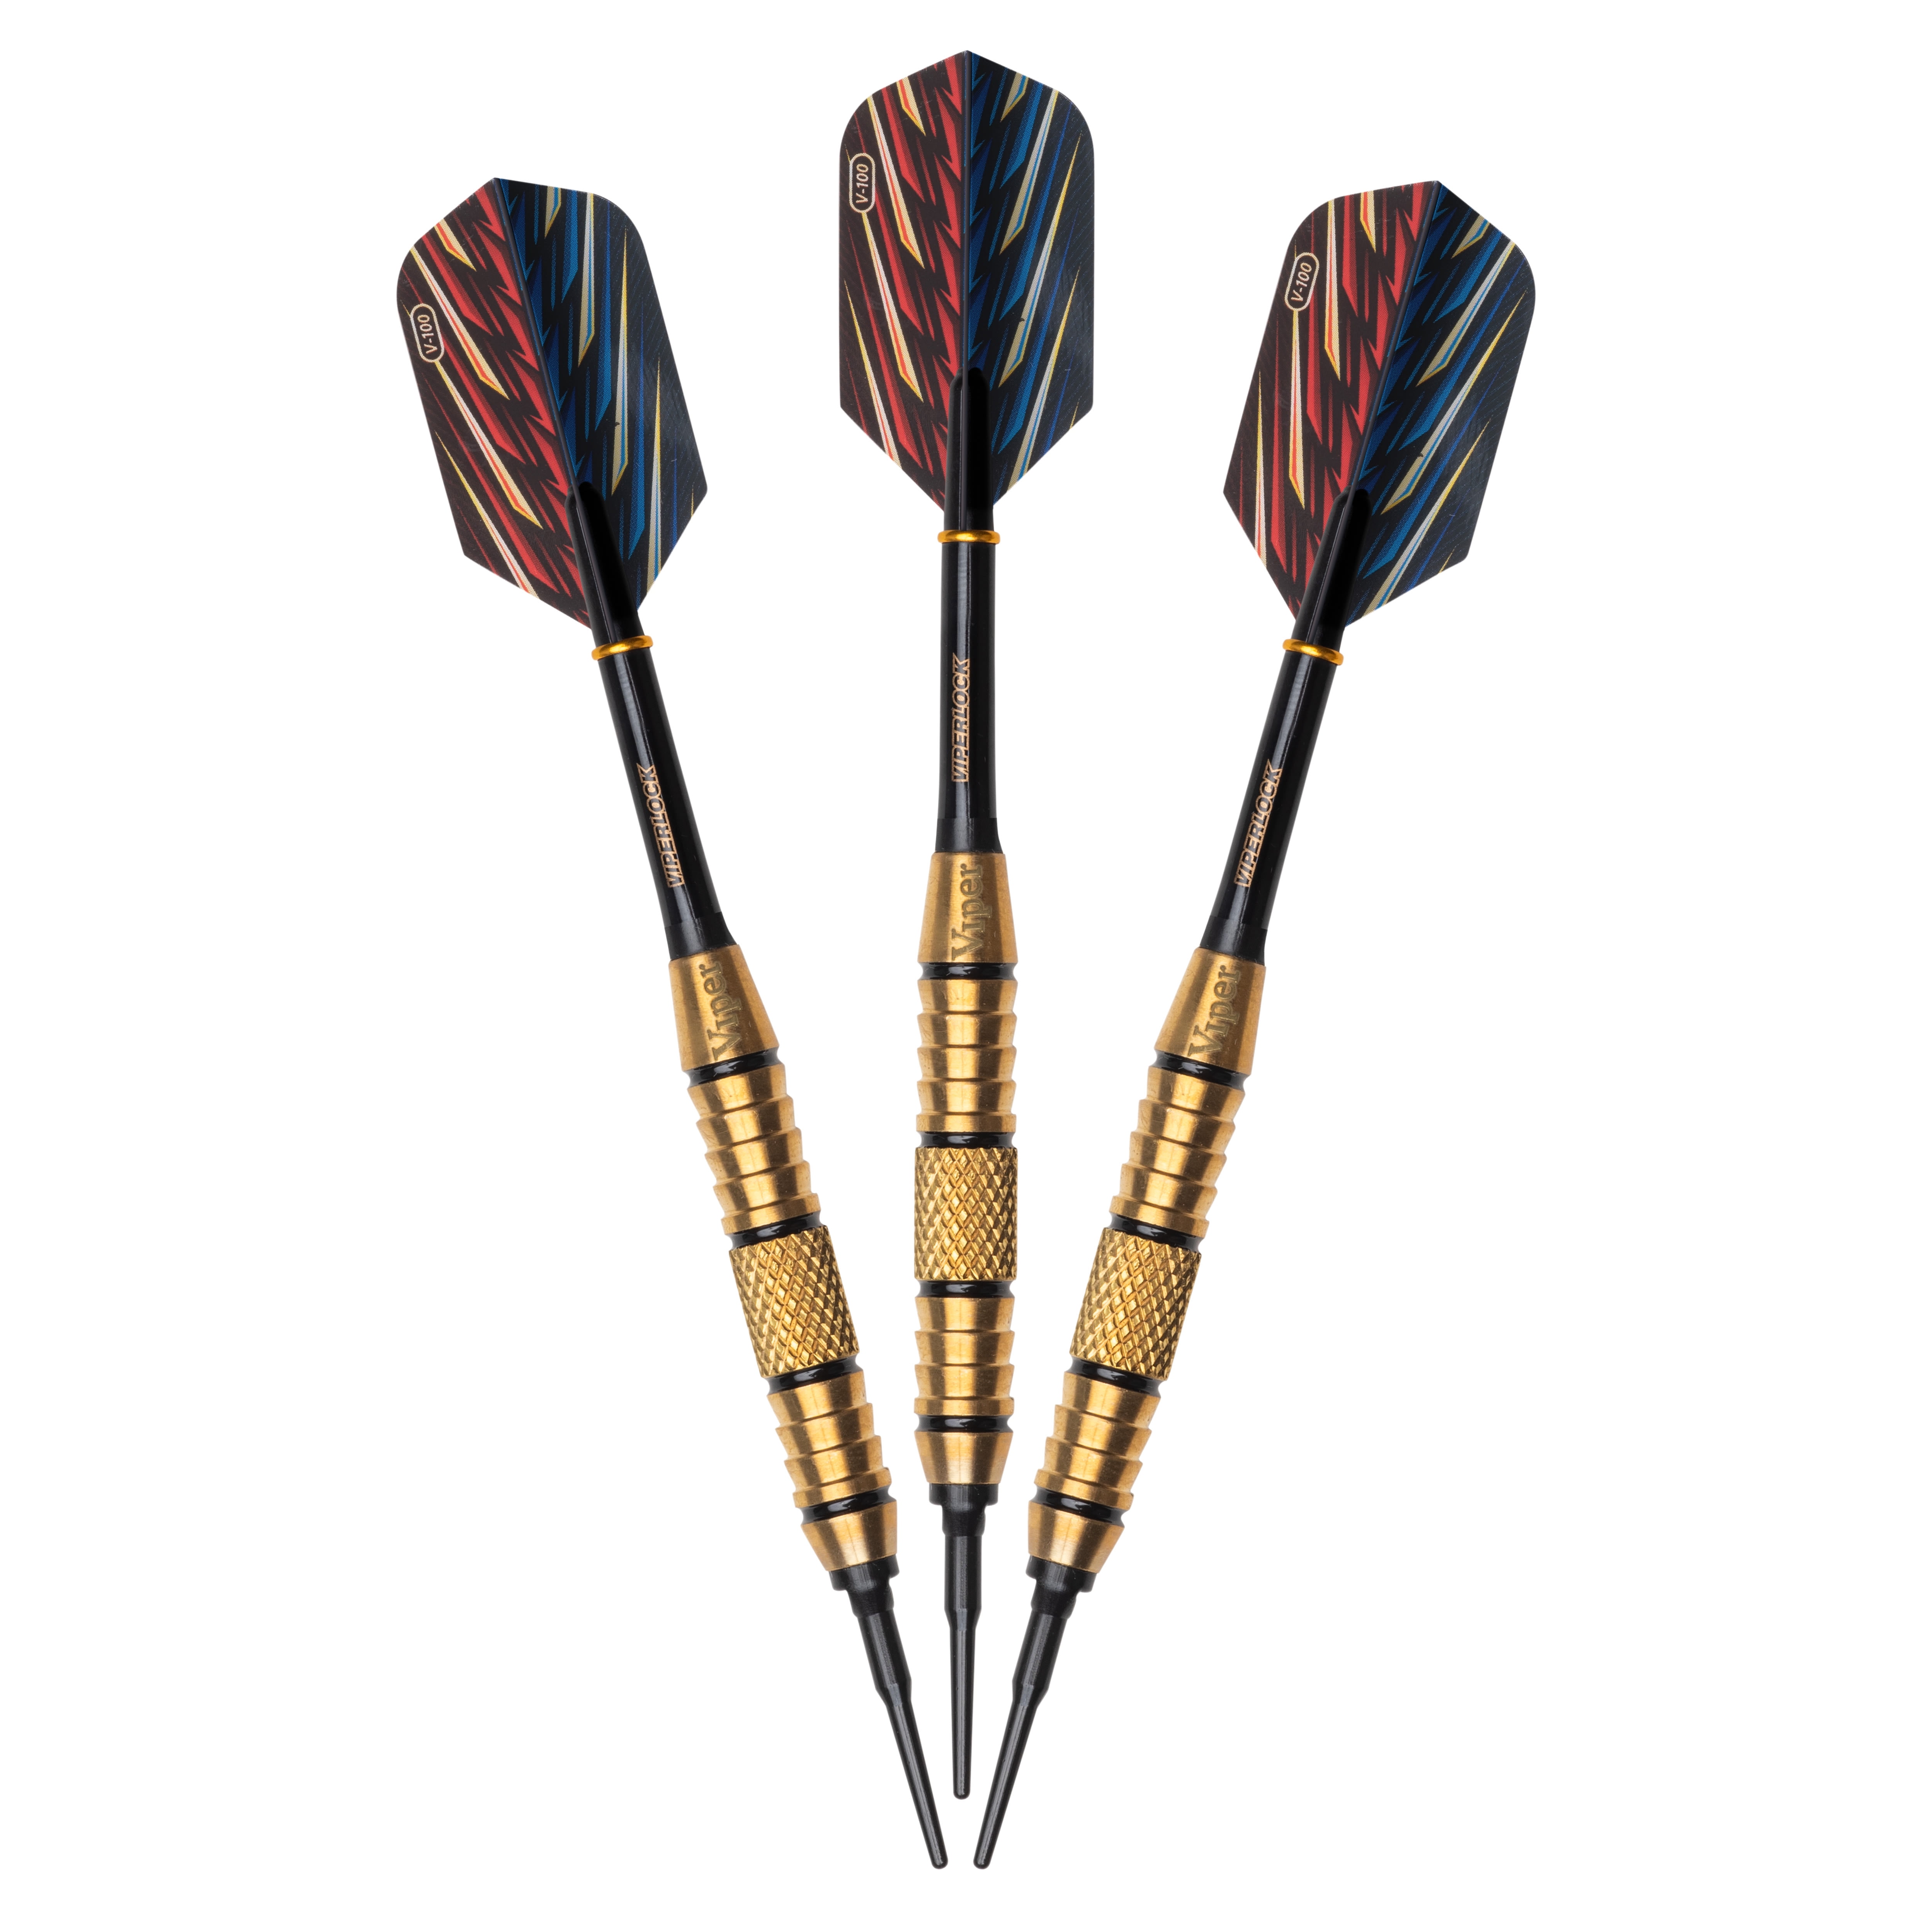 Viper Darts 18 gm BLACK MAGIC Soft Tip Dart Set with American Flag Flights 